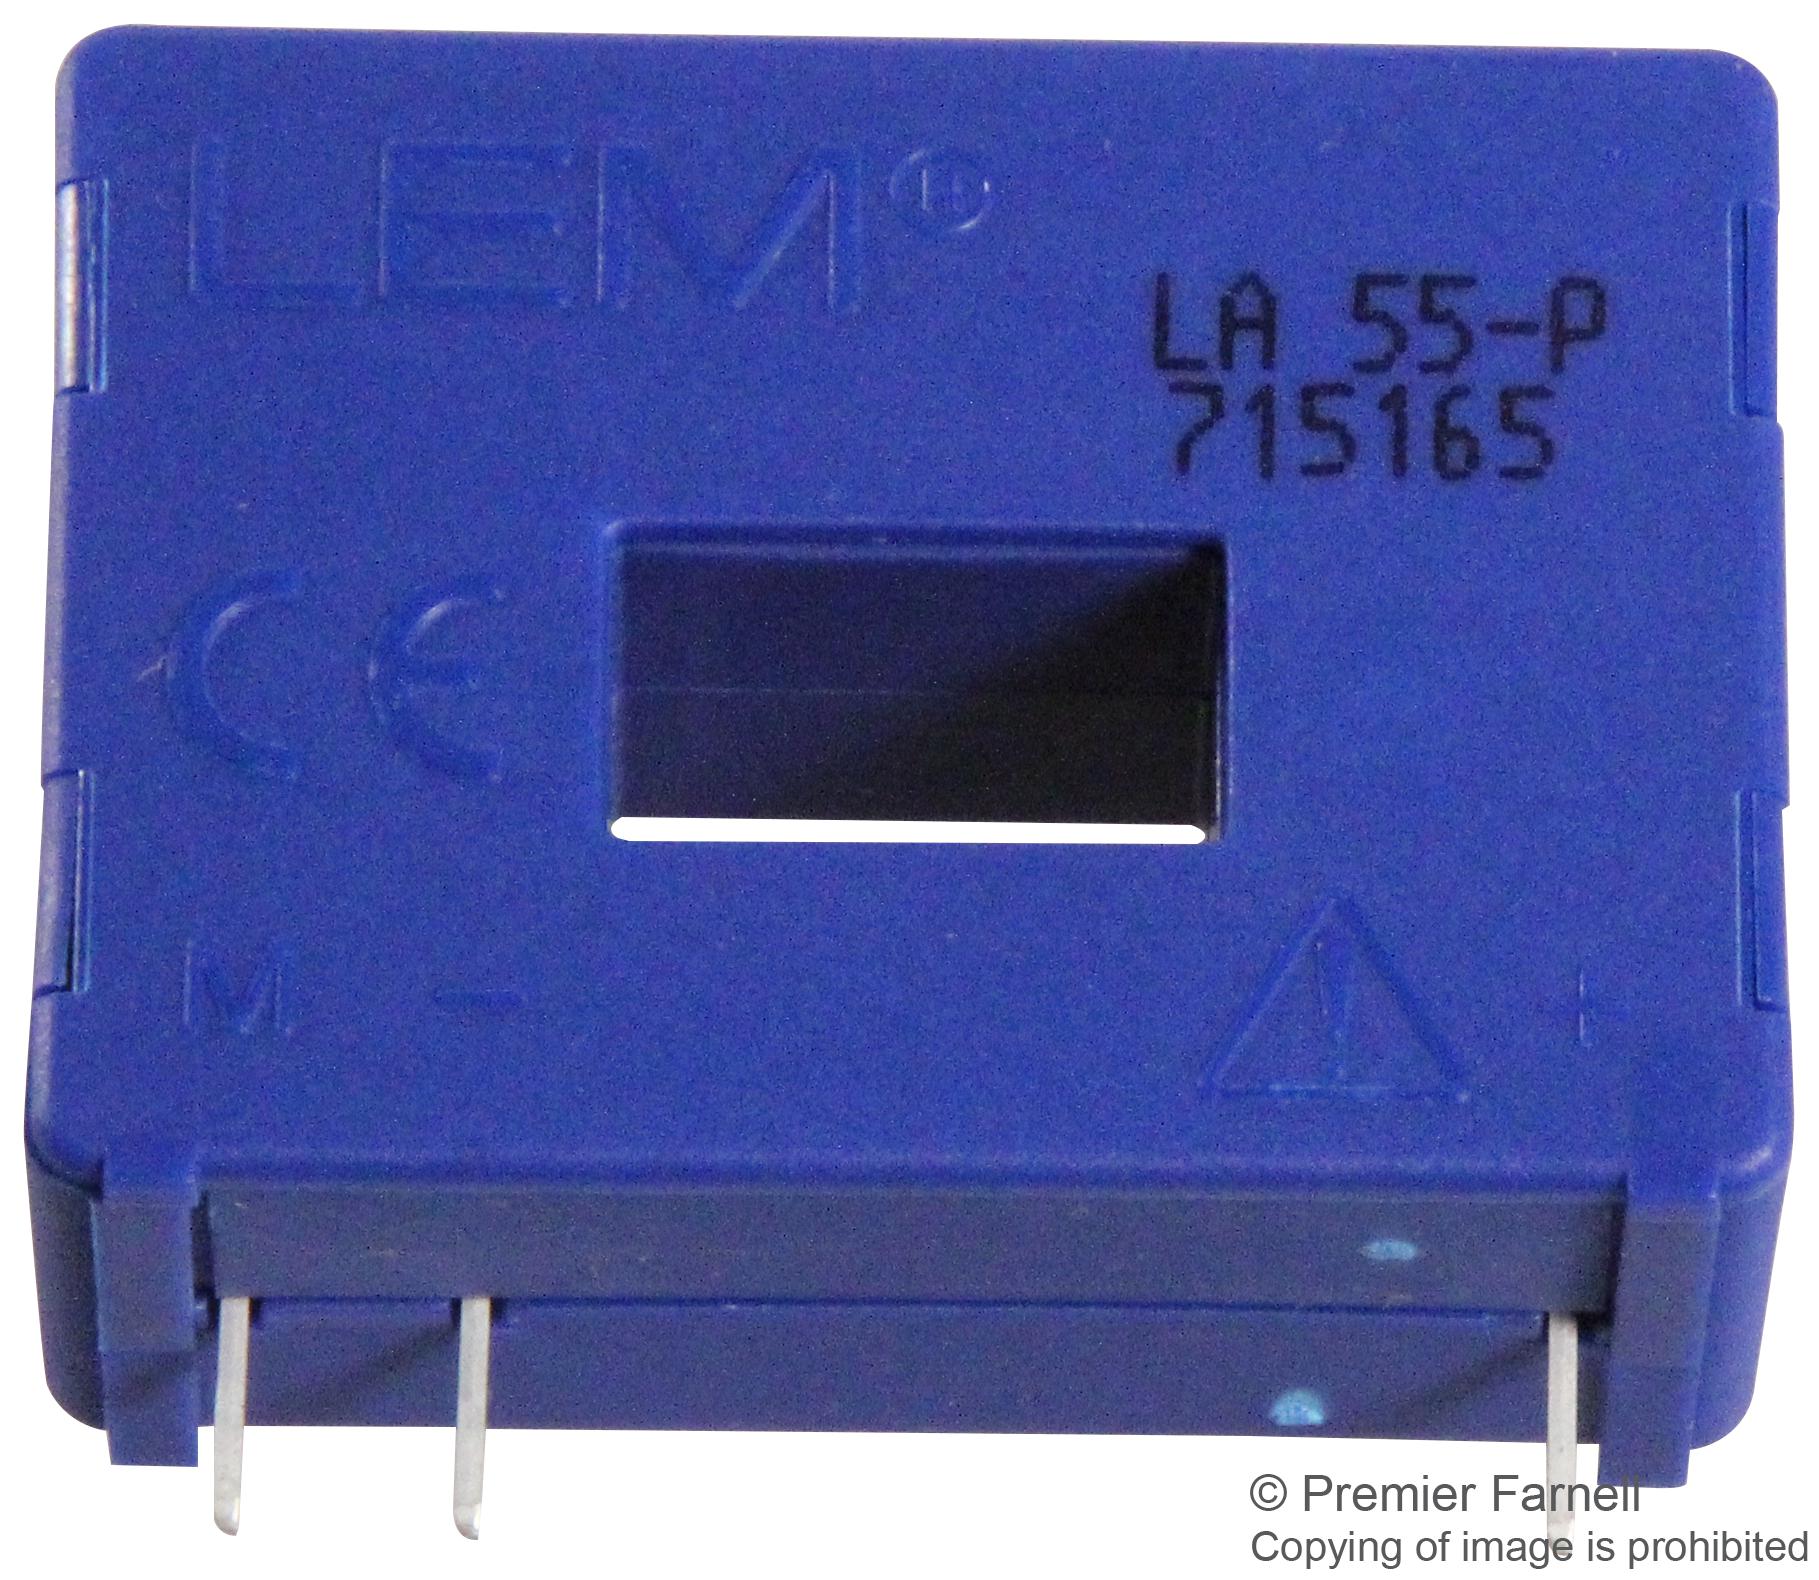 LA 55-P CURRENT TRANSDUCER, 50A, PCB LEM